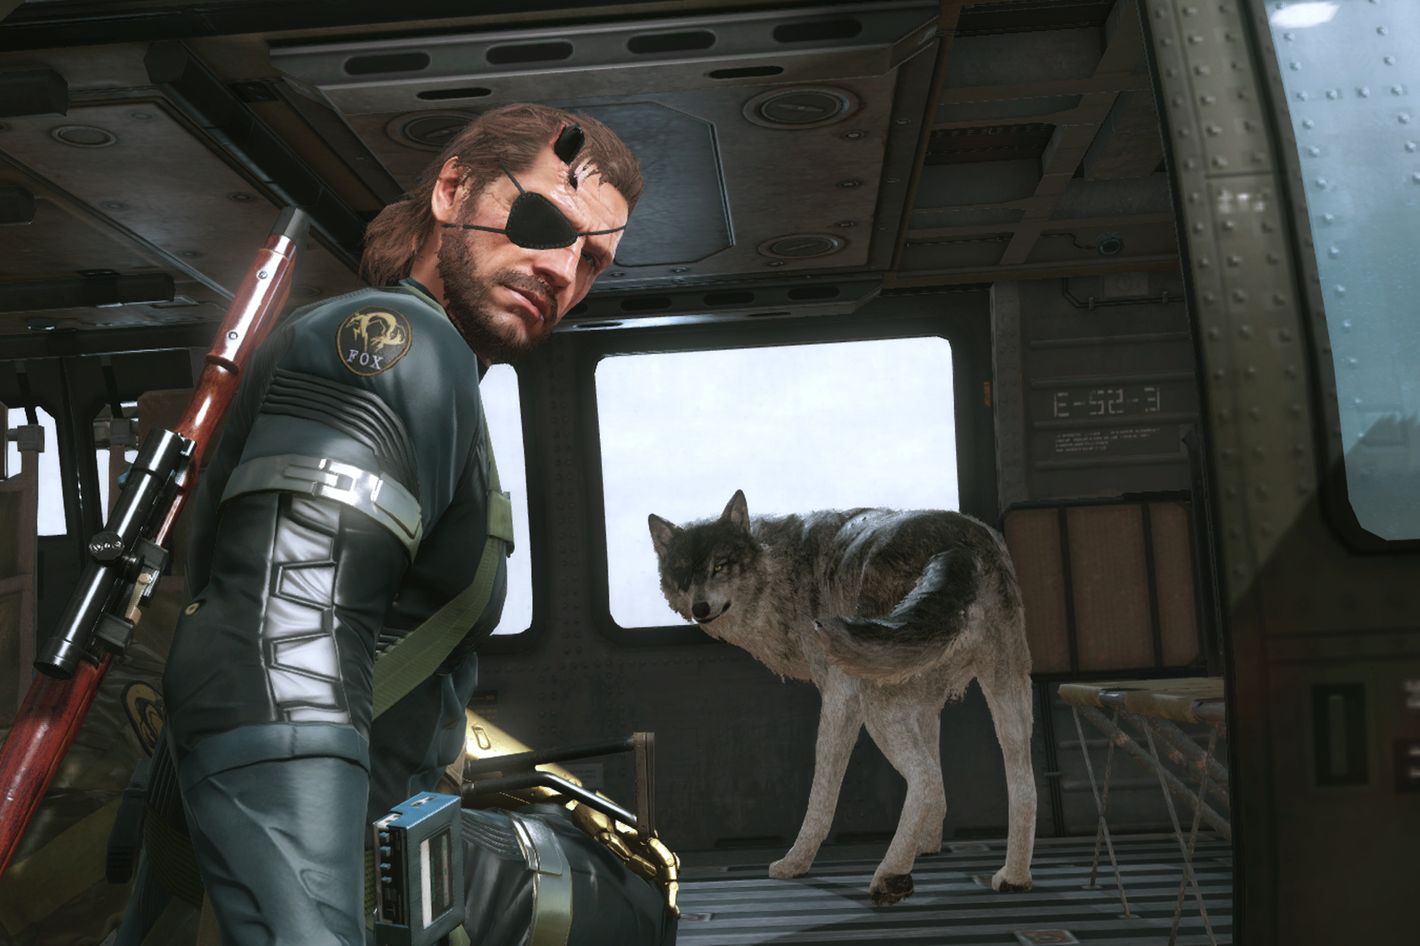 Hideo Kojima isn't involved in Metal Gear Solid 3's remake, Konami